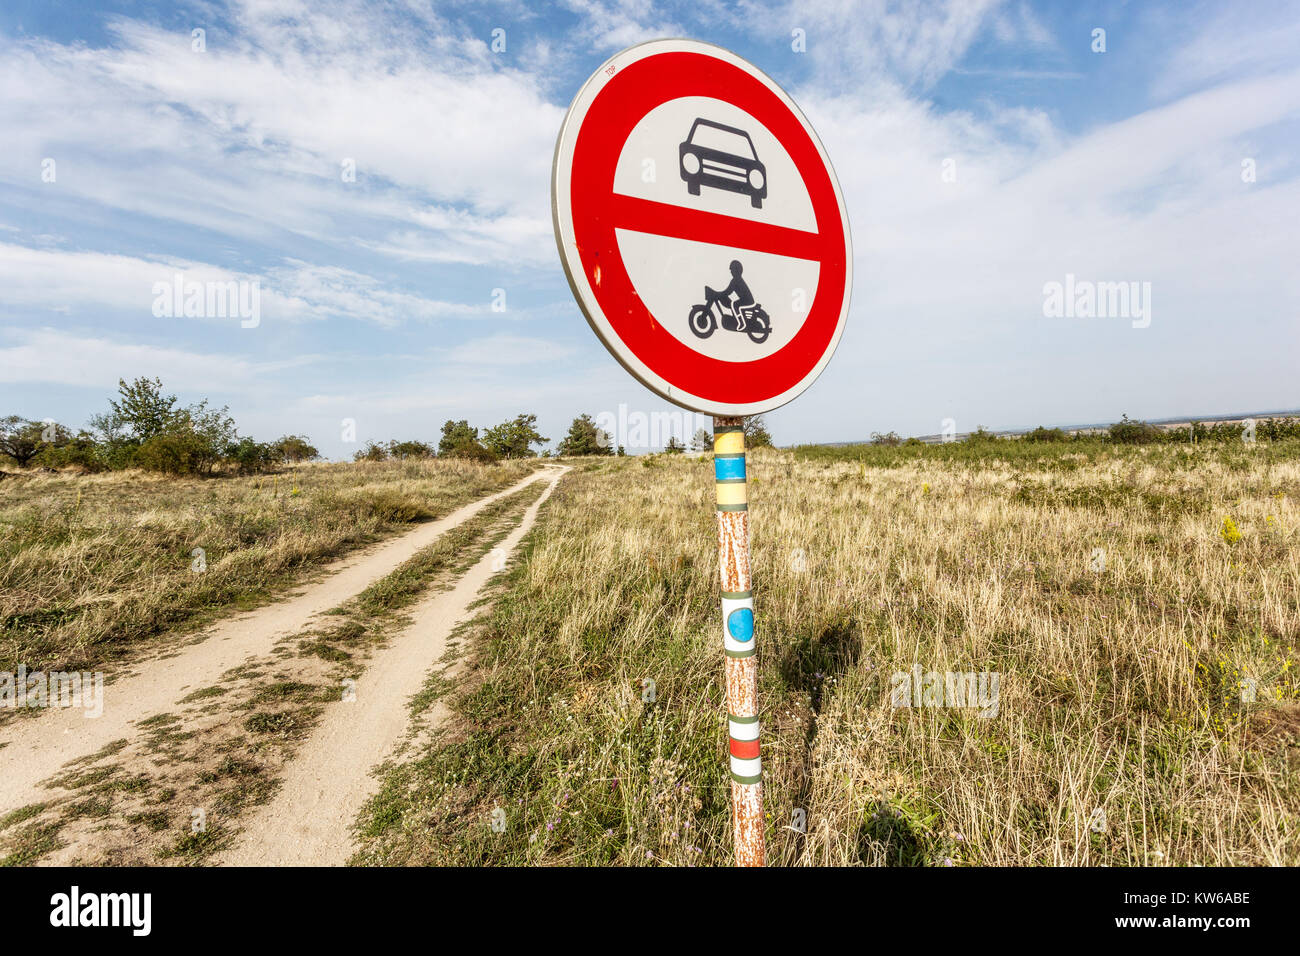 No entry traffic sign, Czech Republic Stock Photo